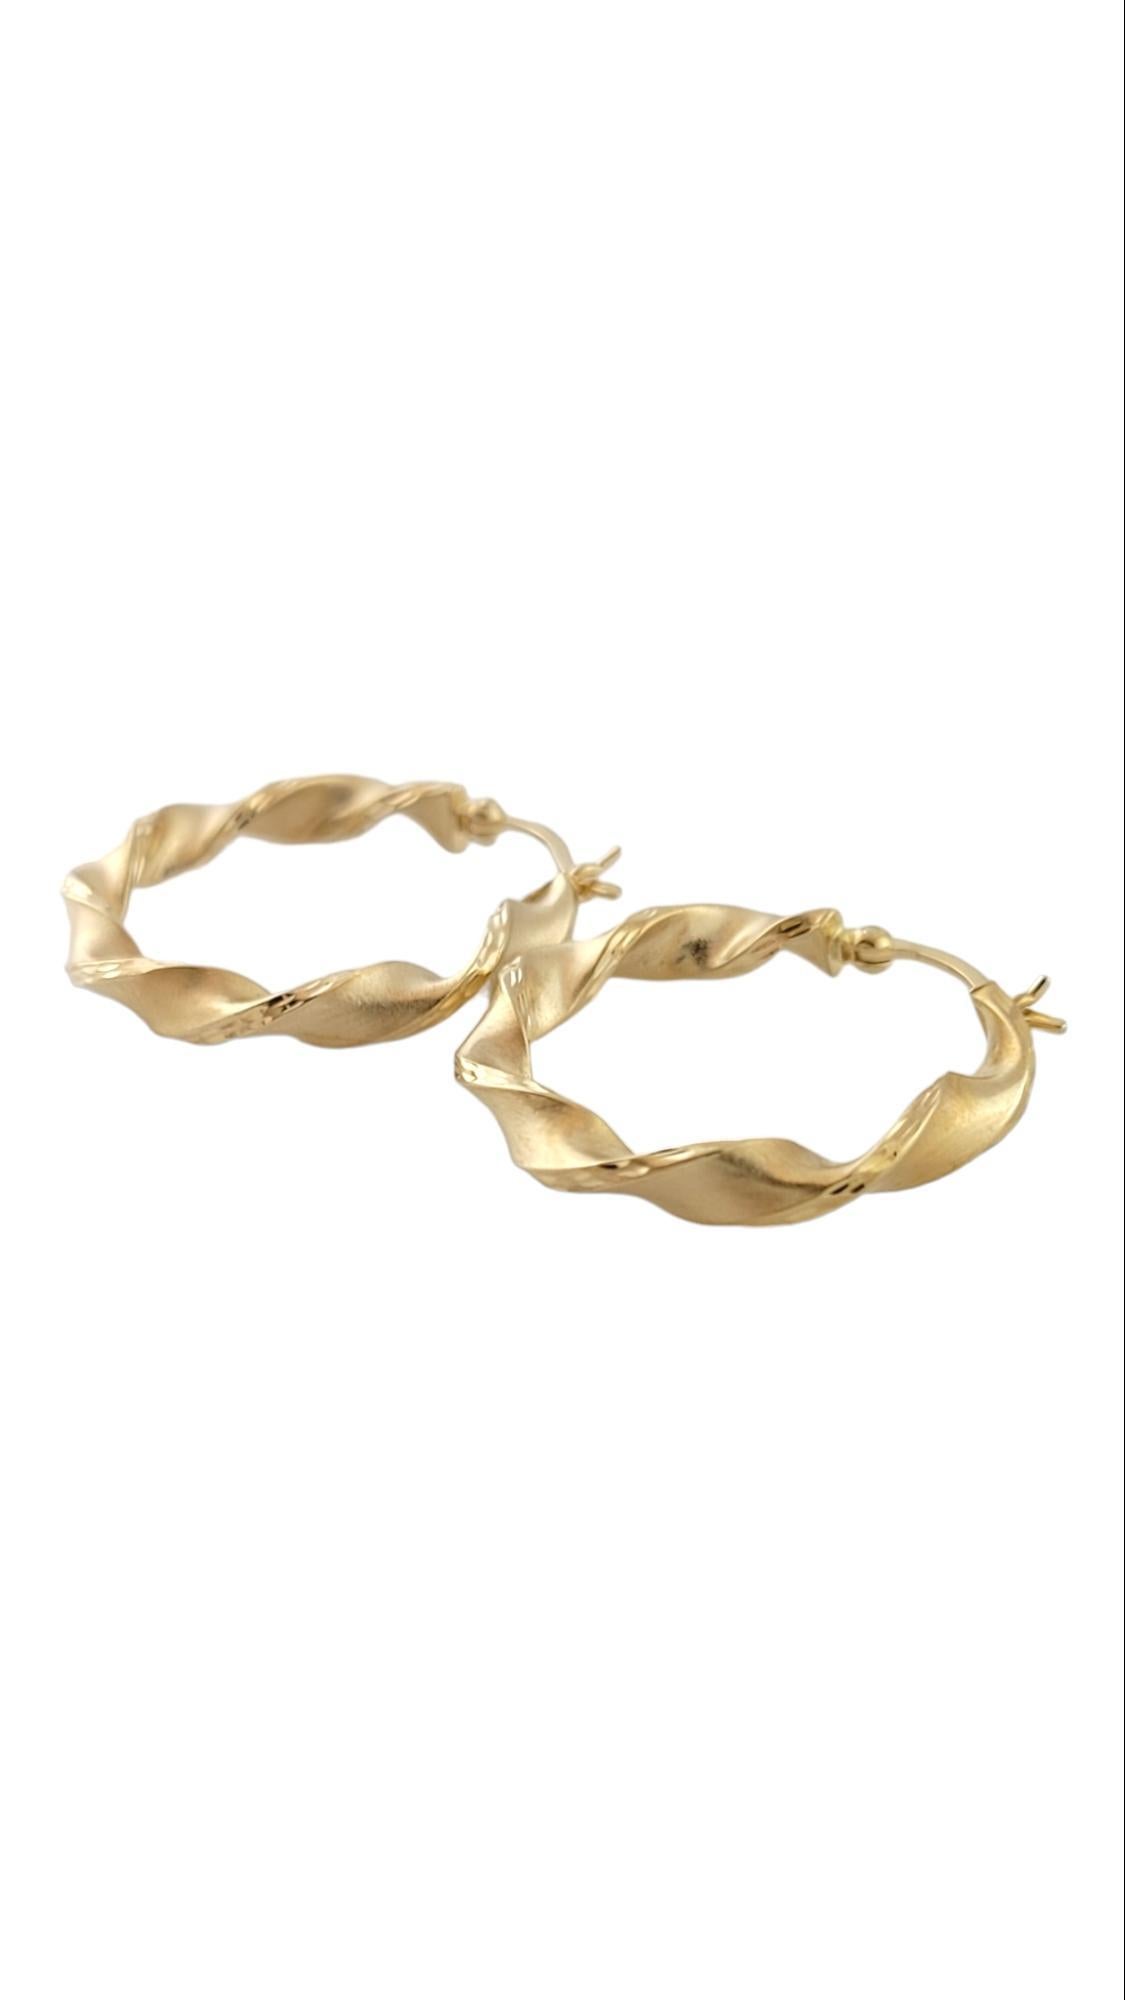 14K Yellow Gold Twisted Hoop Earrings

Gorgeous set of 14K gold hoop earrings in a beautiful, twisted design!

Diameter: 25.74mm / 1.01